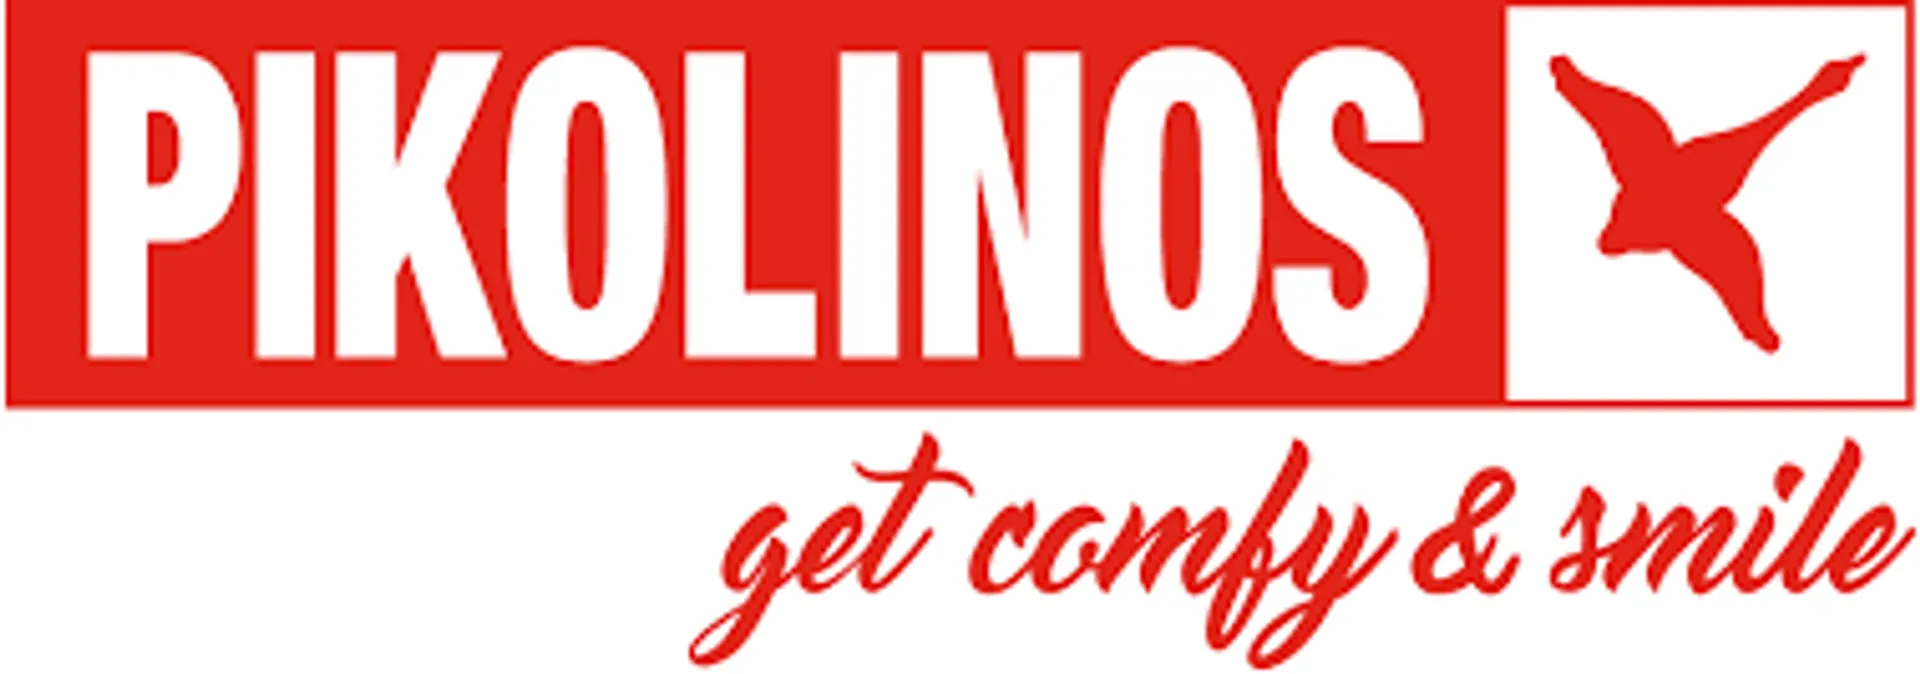 PIKOLINOS logo de catálogo